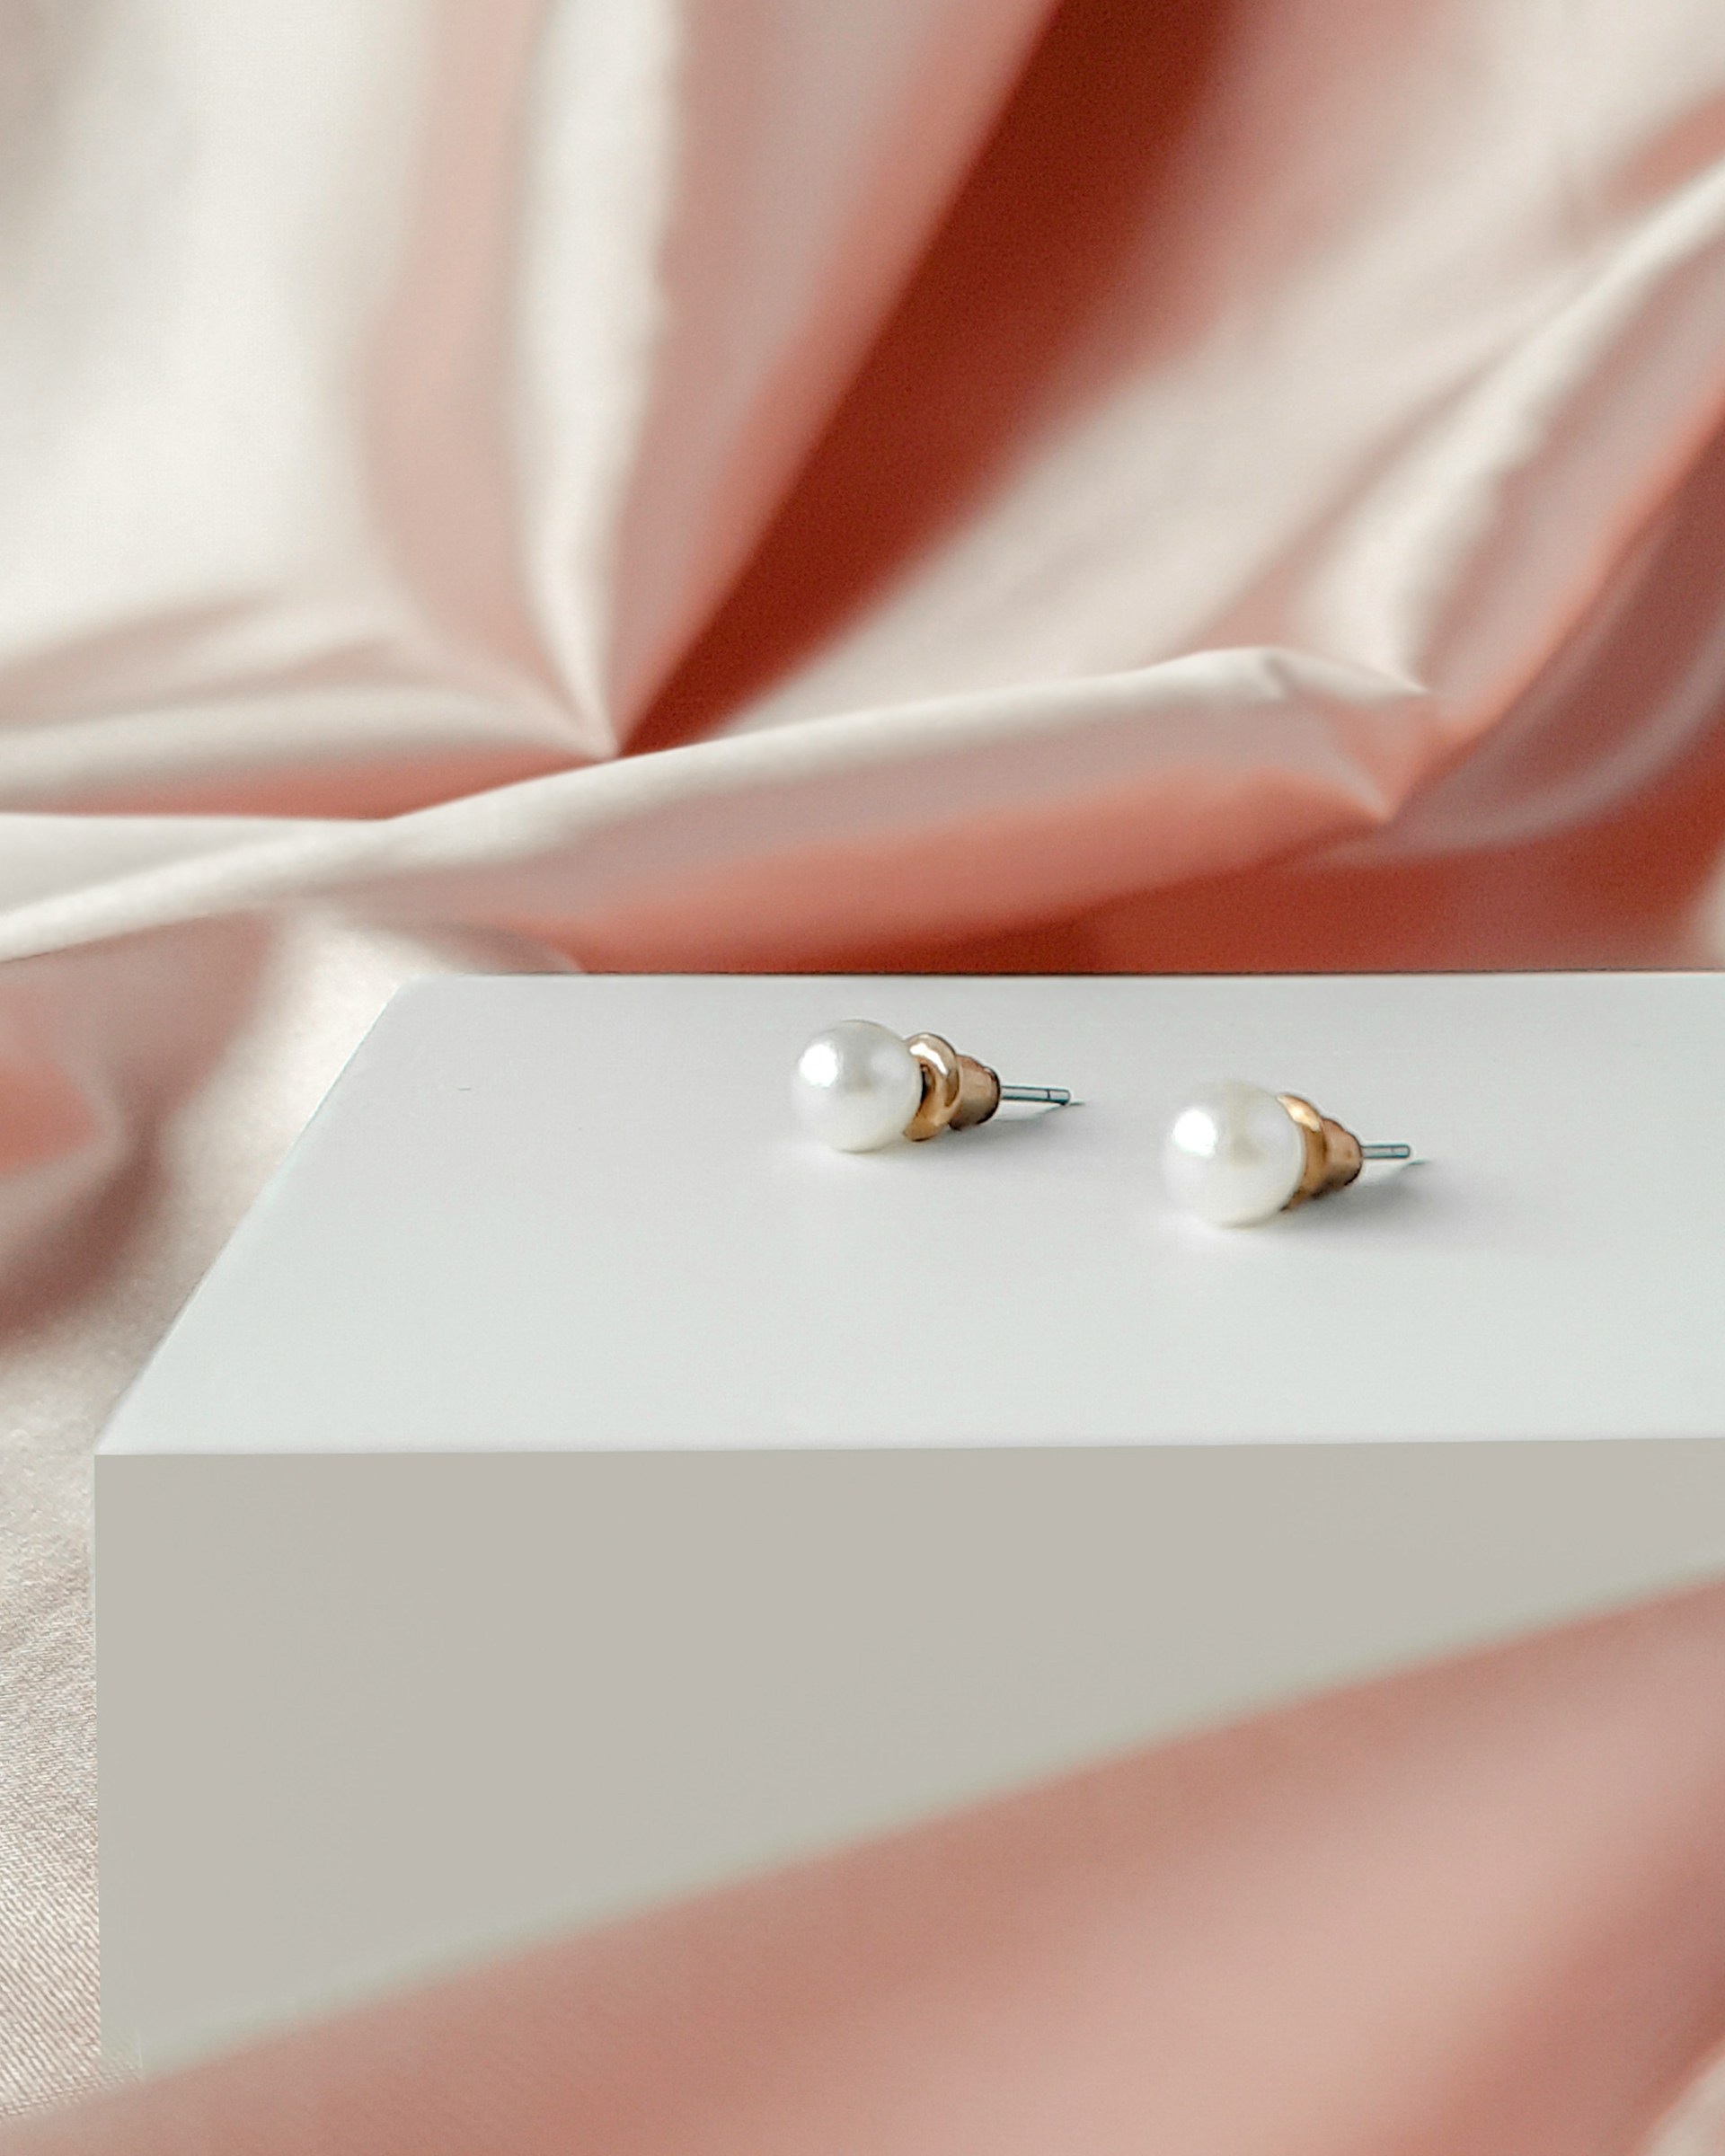 A pair of woman's earrings | Source: Unsplash